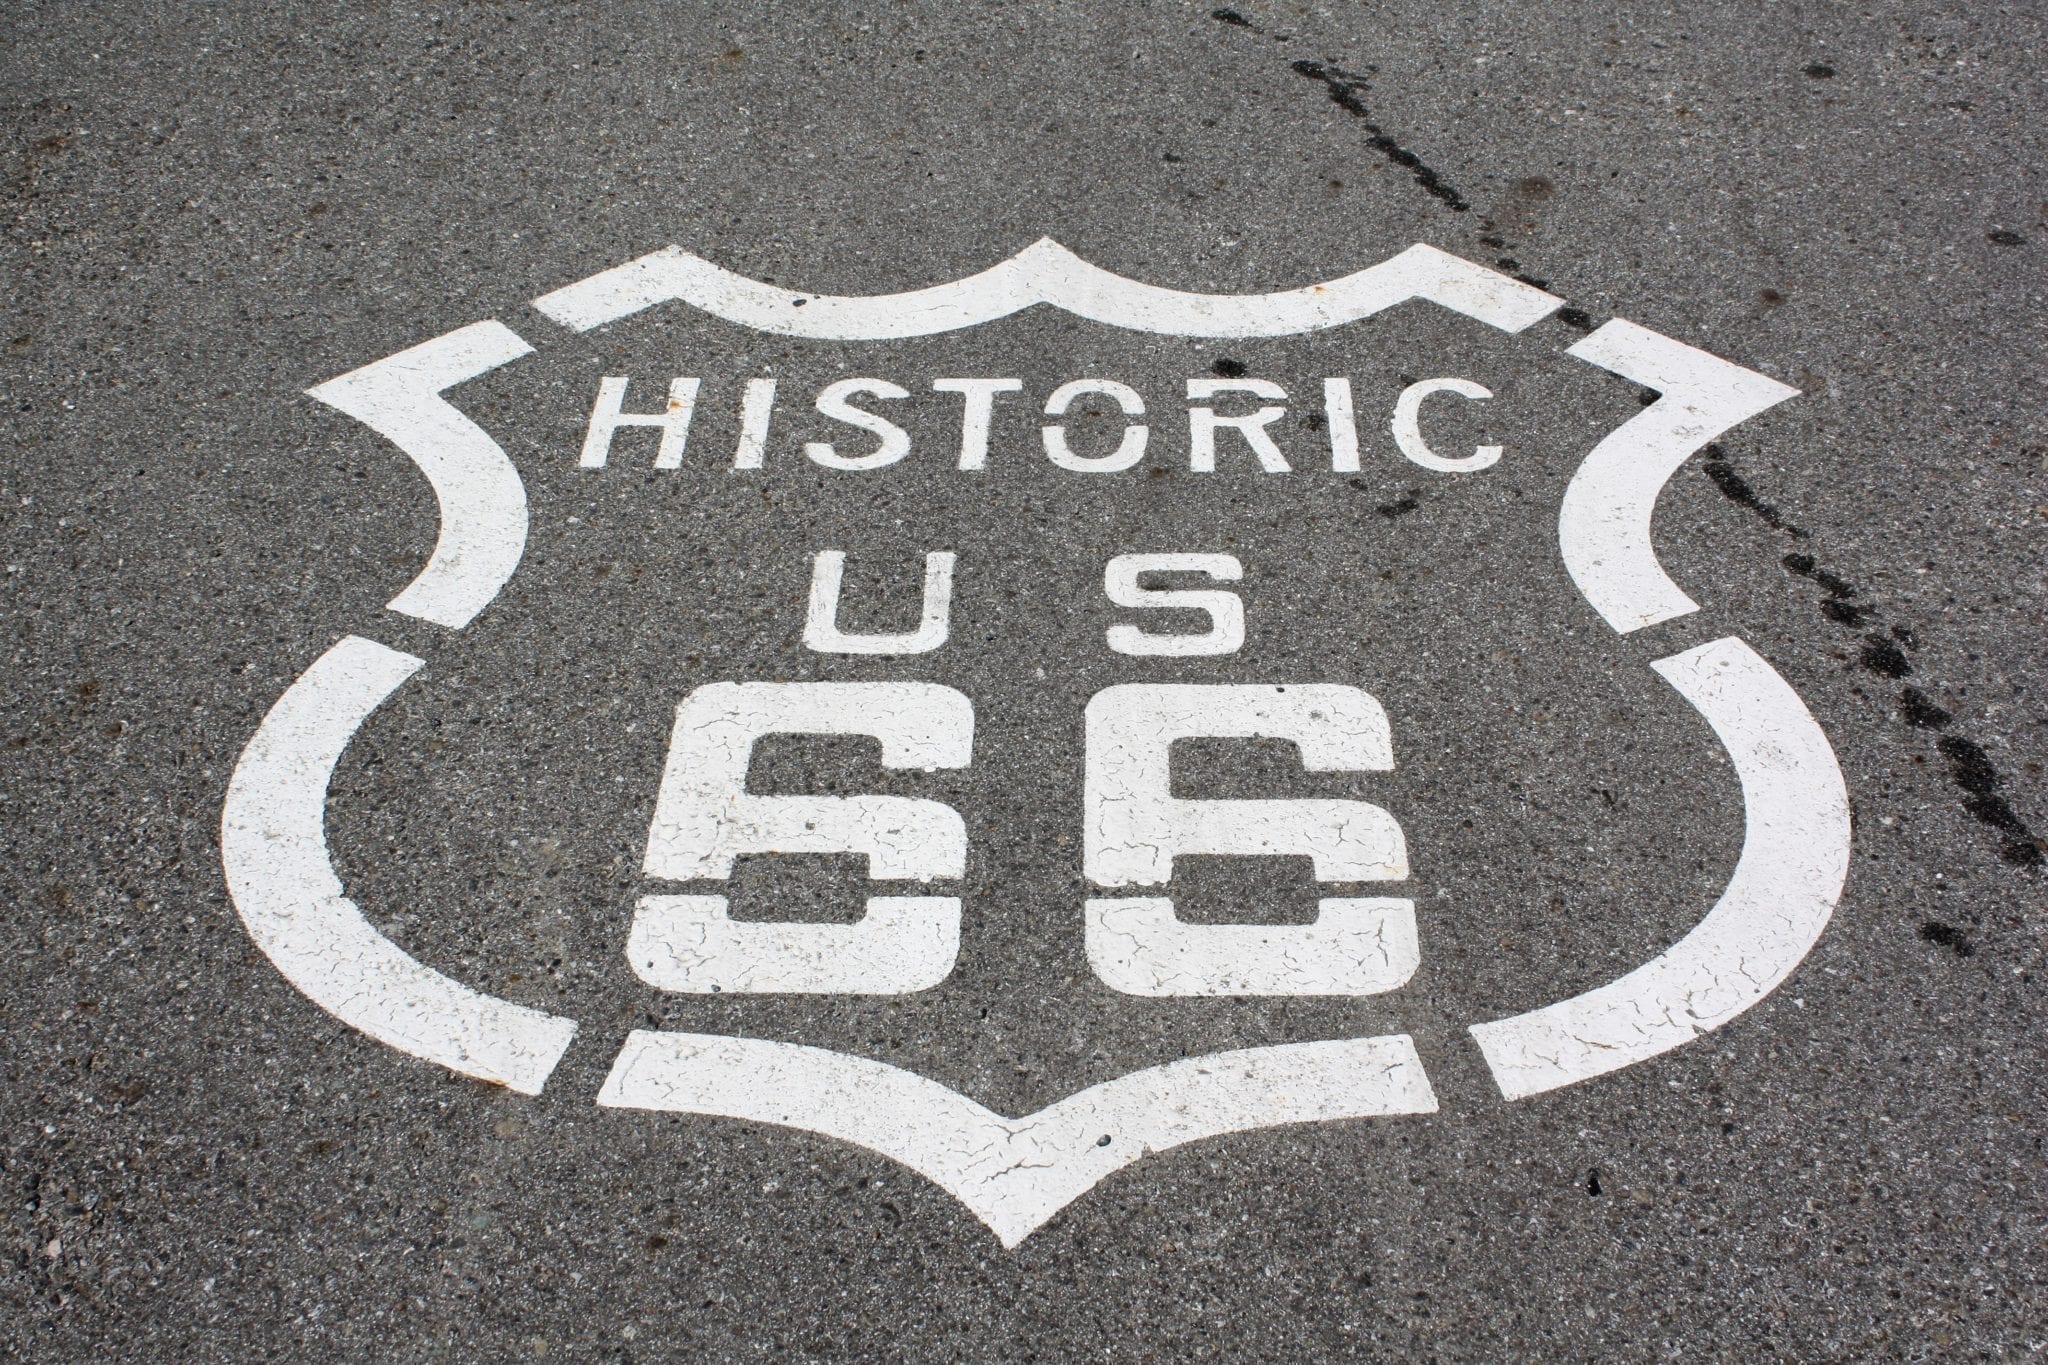 Route 66 Stencil: Santa Monica History Museum Collection